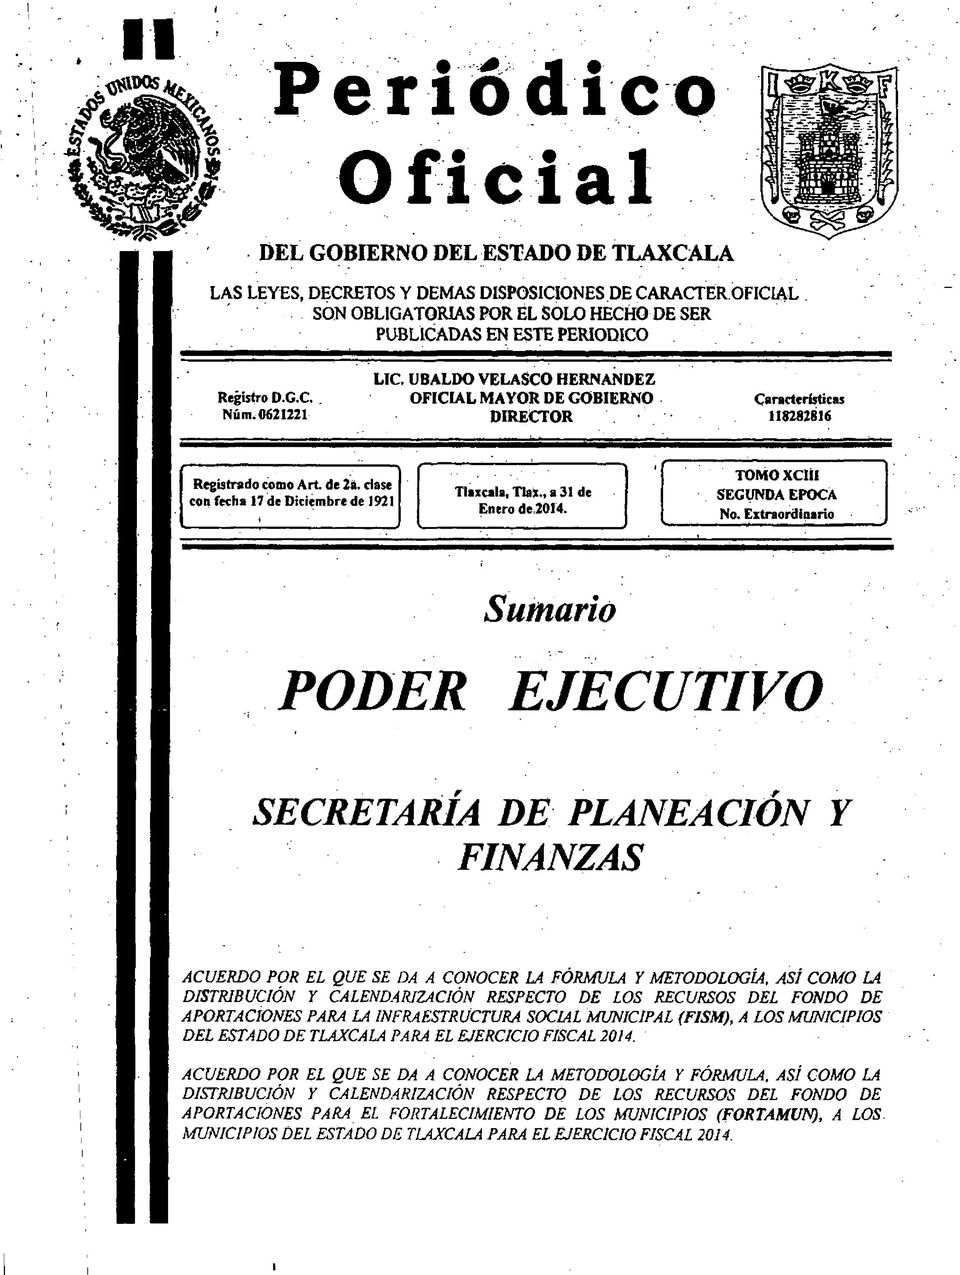 0621221 LIC U BALDO VELASCO HERNANDEZ OFICIAL MAYOR DE GOBIERNO DIRECTOR Características 118282816 Registrado como A rt de 2á. dase con fecha 17 de Diciembre de 1921 Tlaxcala, Tlax.